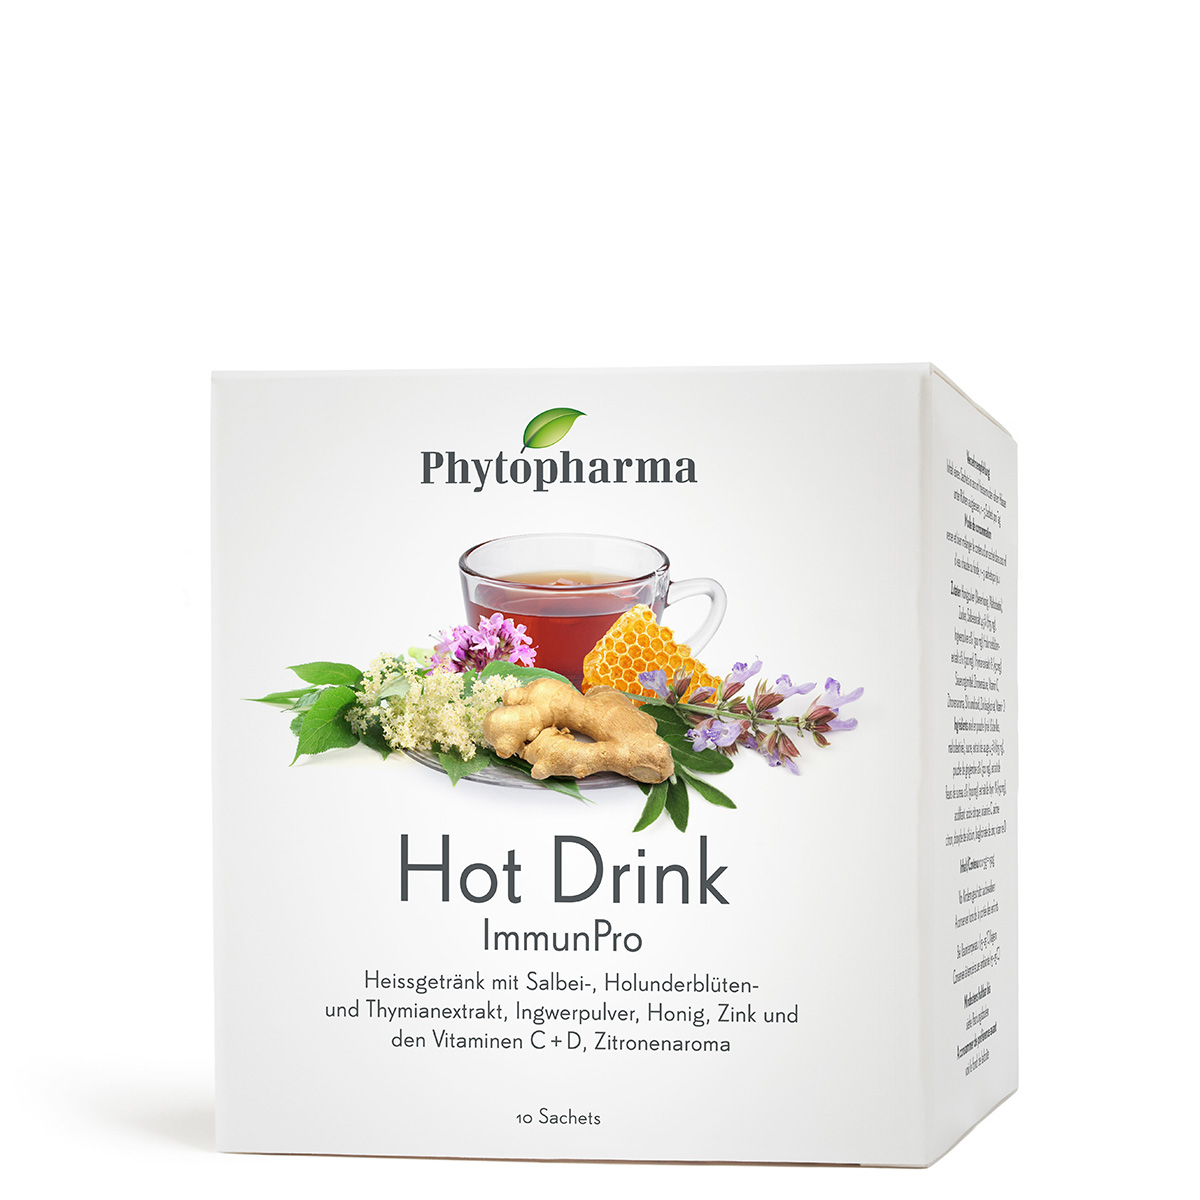 Phytopharma Hot Drink ImmunPro 10 Sachets